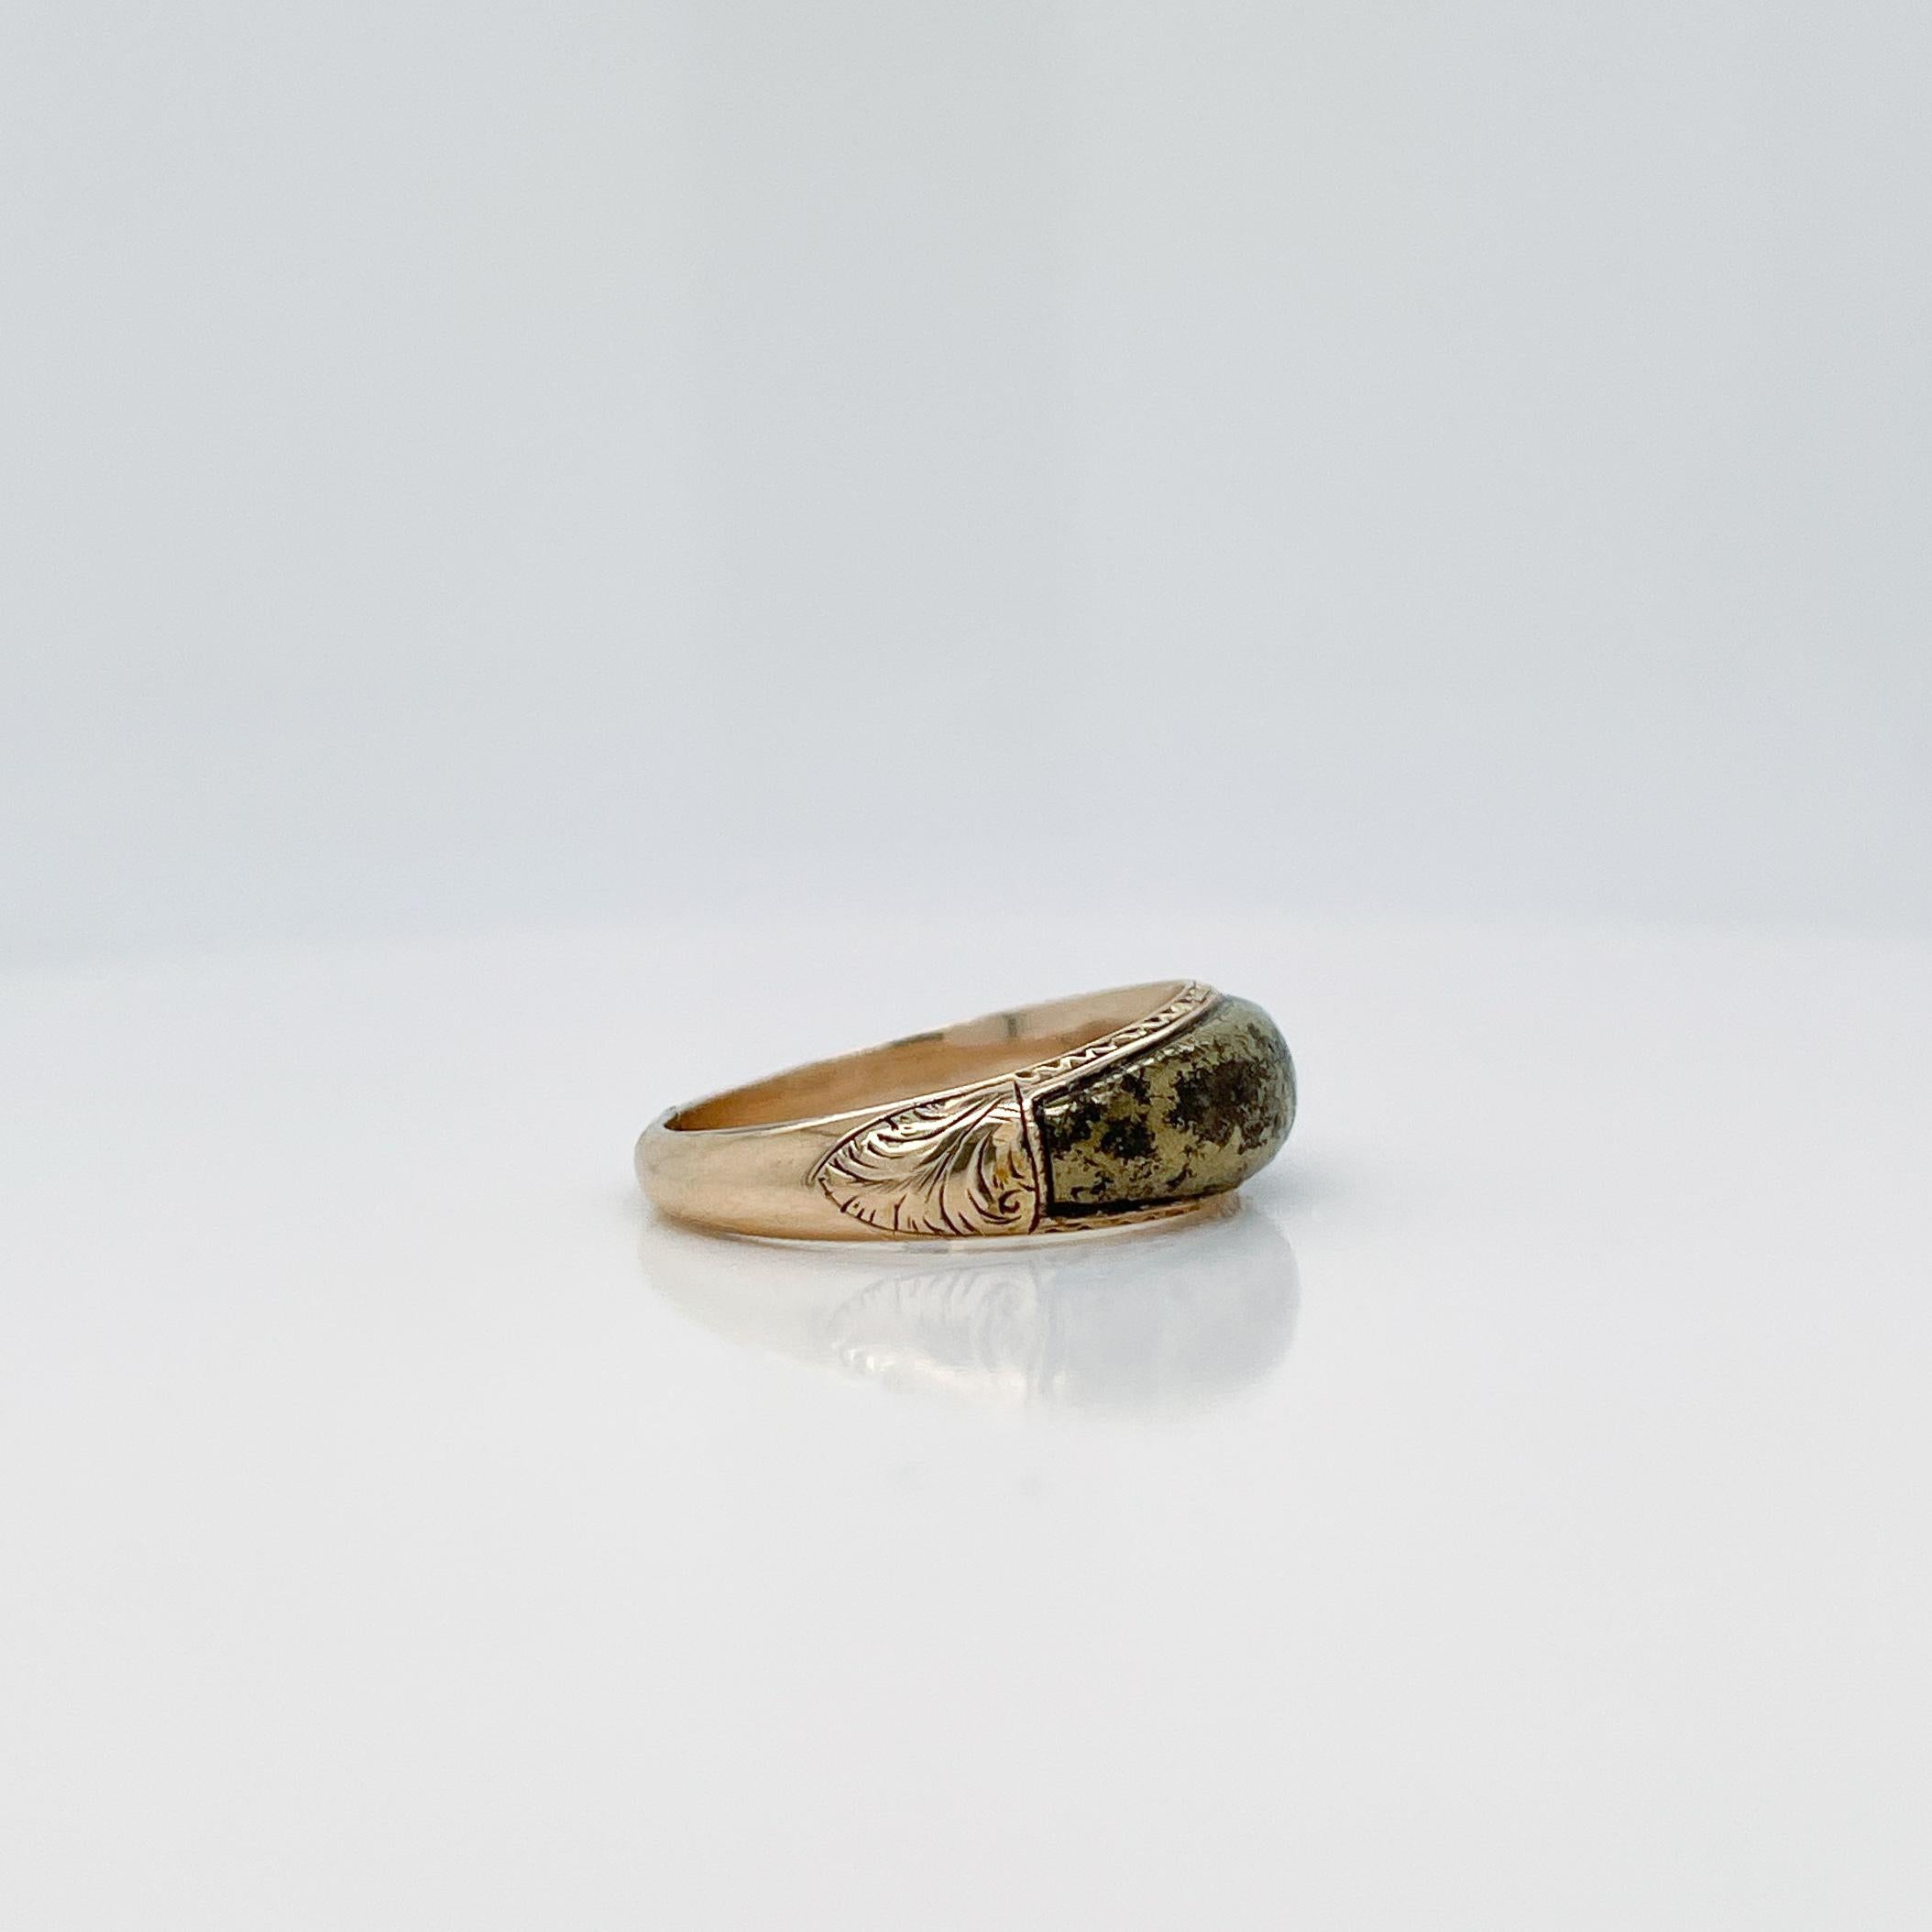 Antique Victorian 14K Gold & Pyrite or Gold Quartz Signet / Band Ring For Sale 2